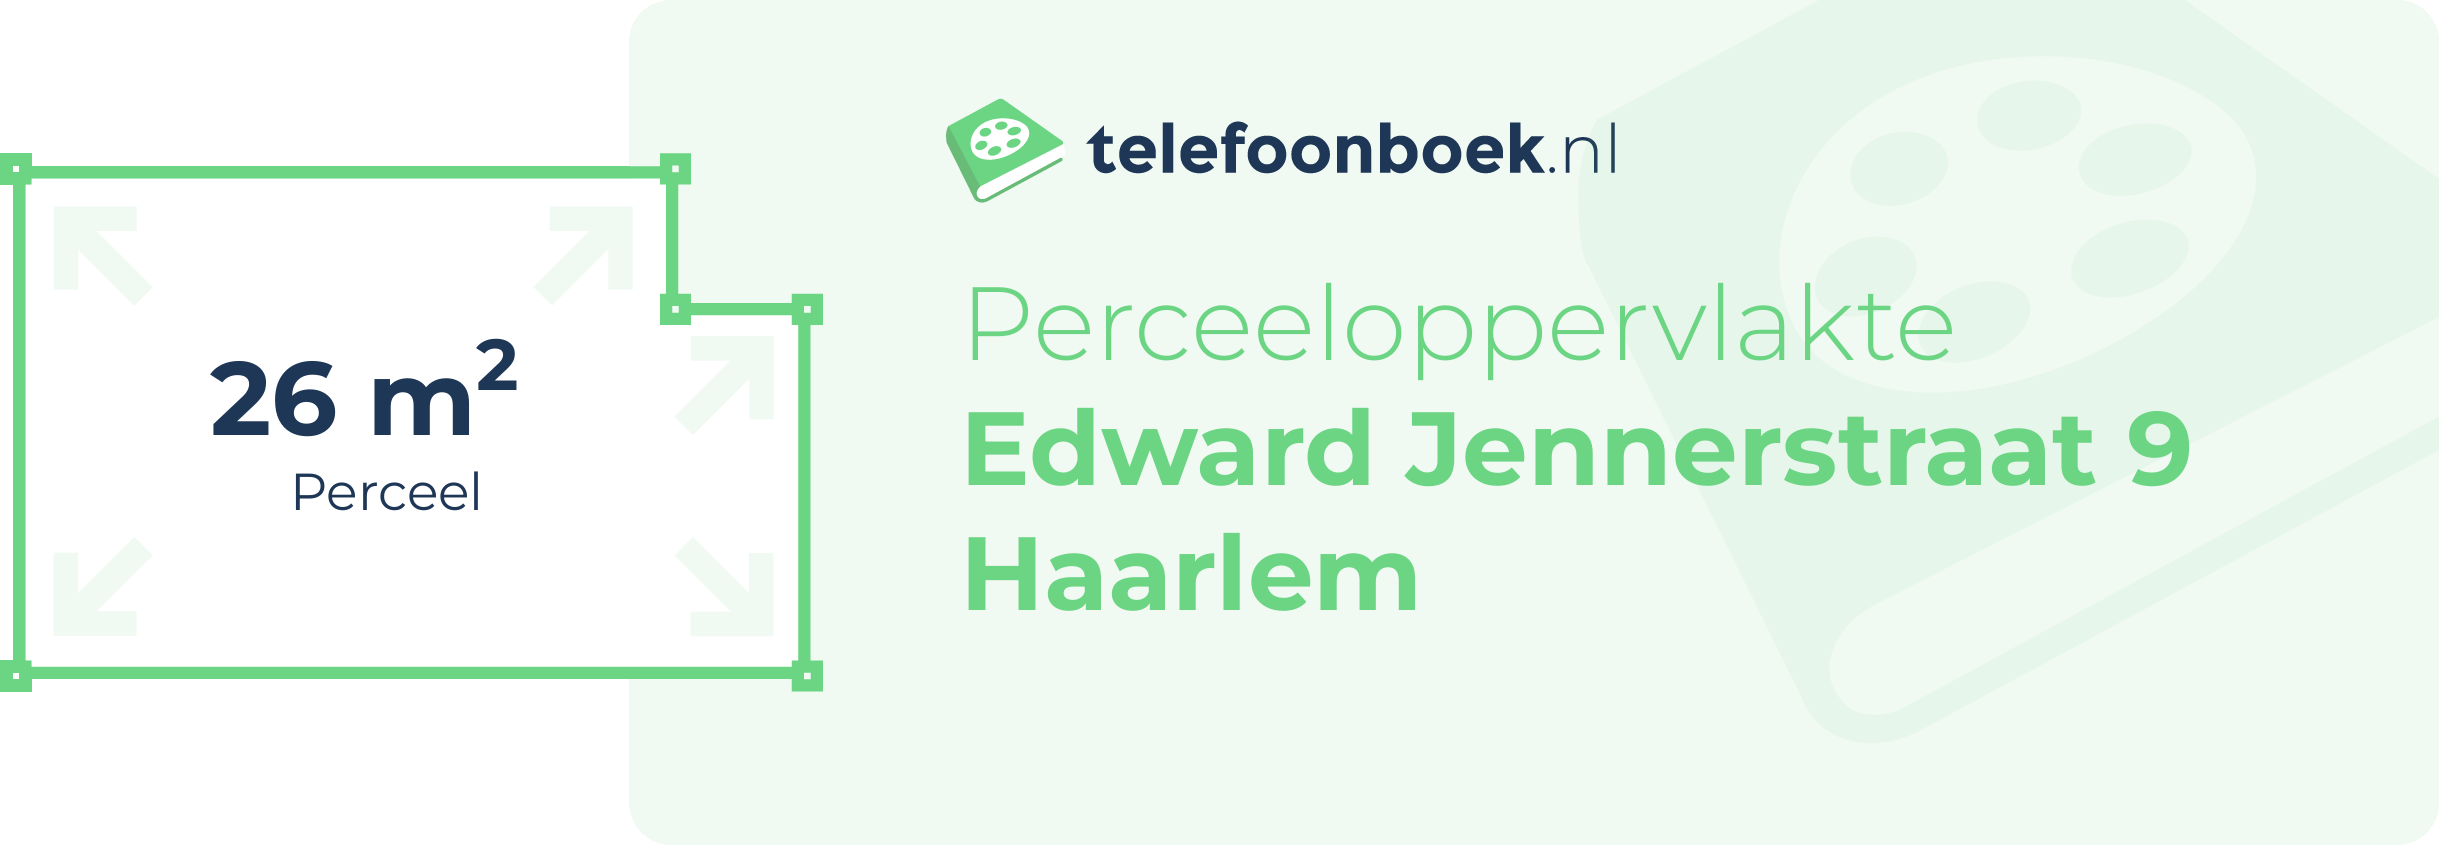 Perceeloppervlakte Edward Jennerstraat 9 Haarlem